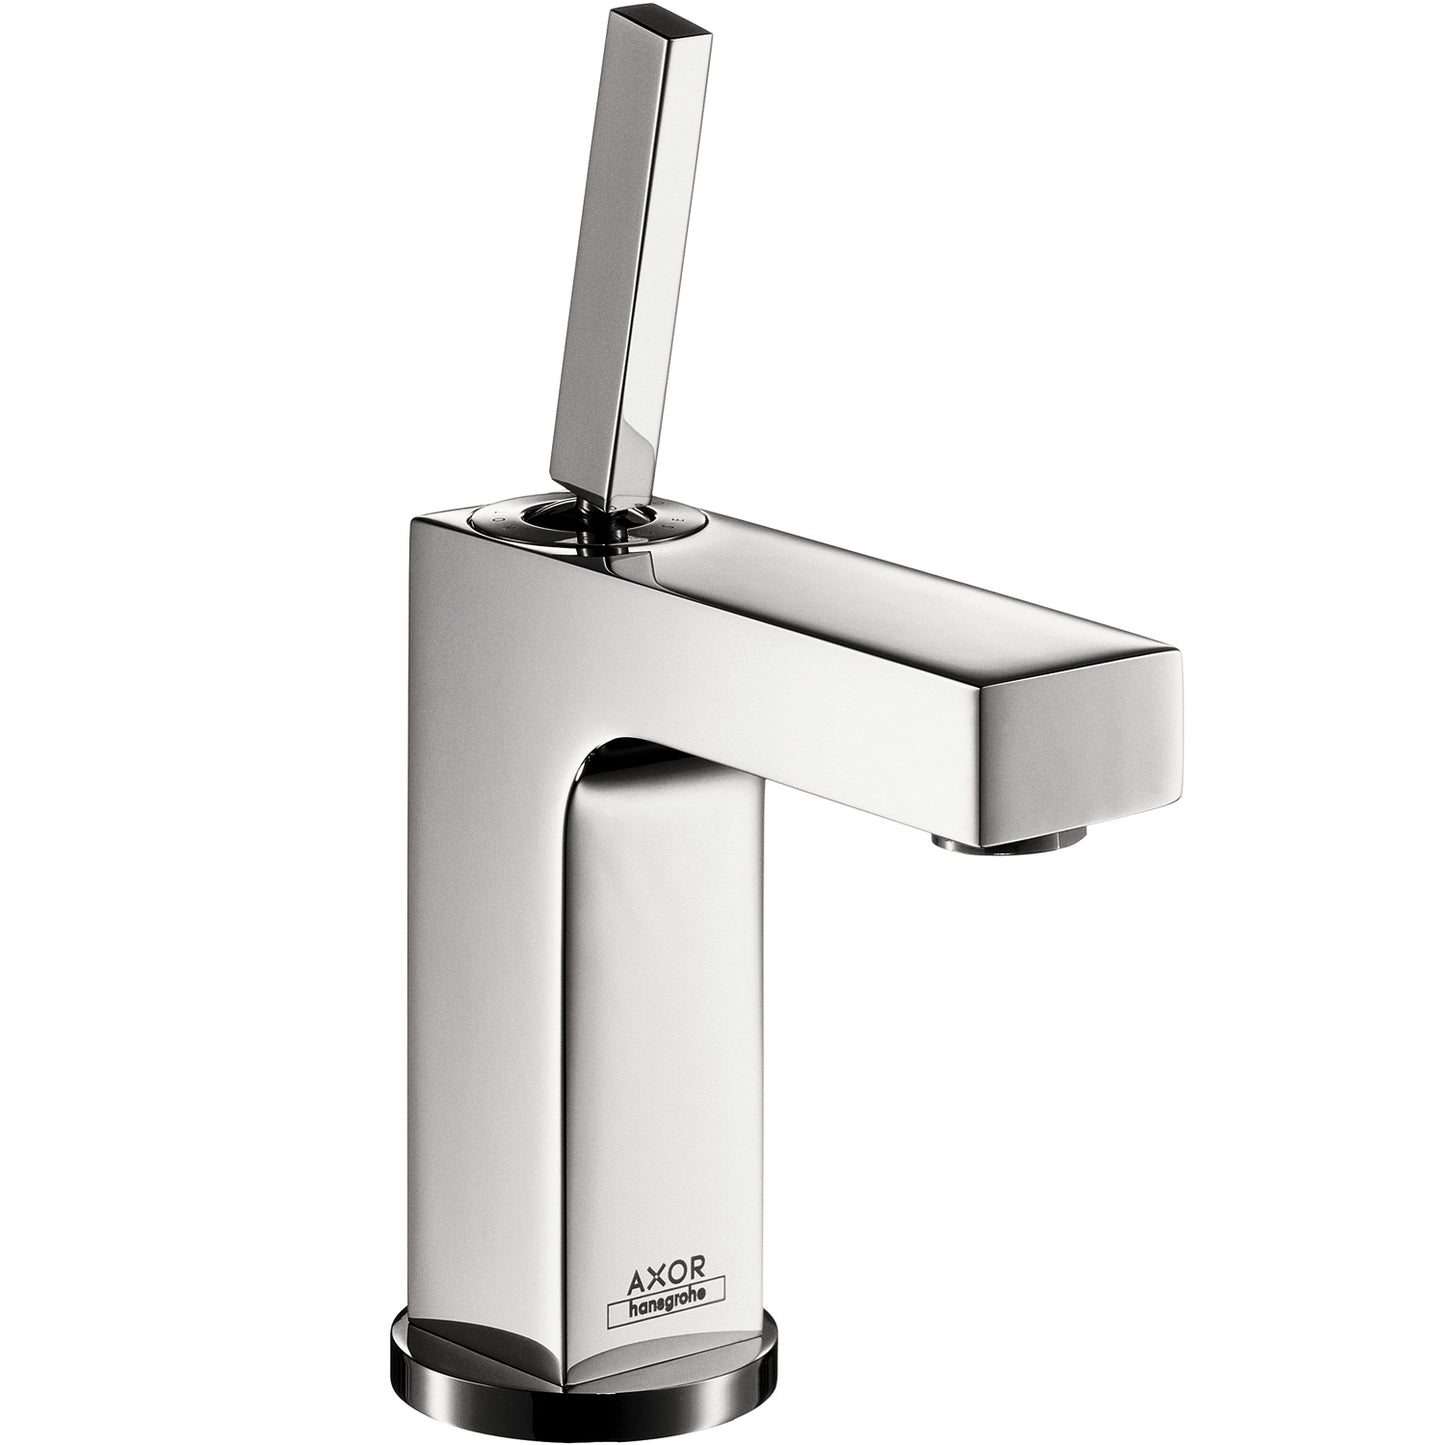 AXOR 39010001 Chrome Citterio Modern Single Hole Bathroom Faucet 1.2 GPM